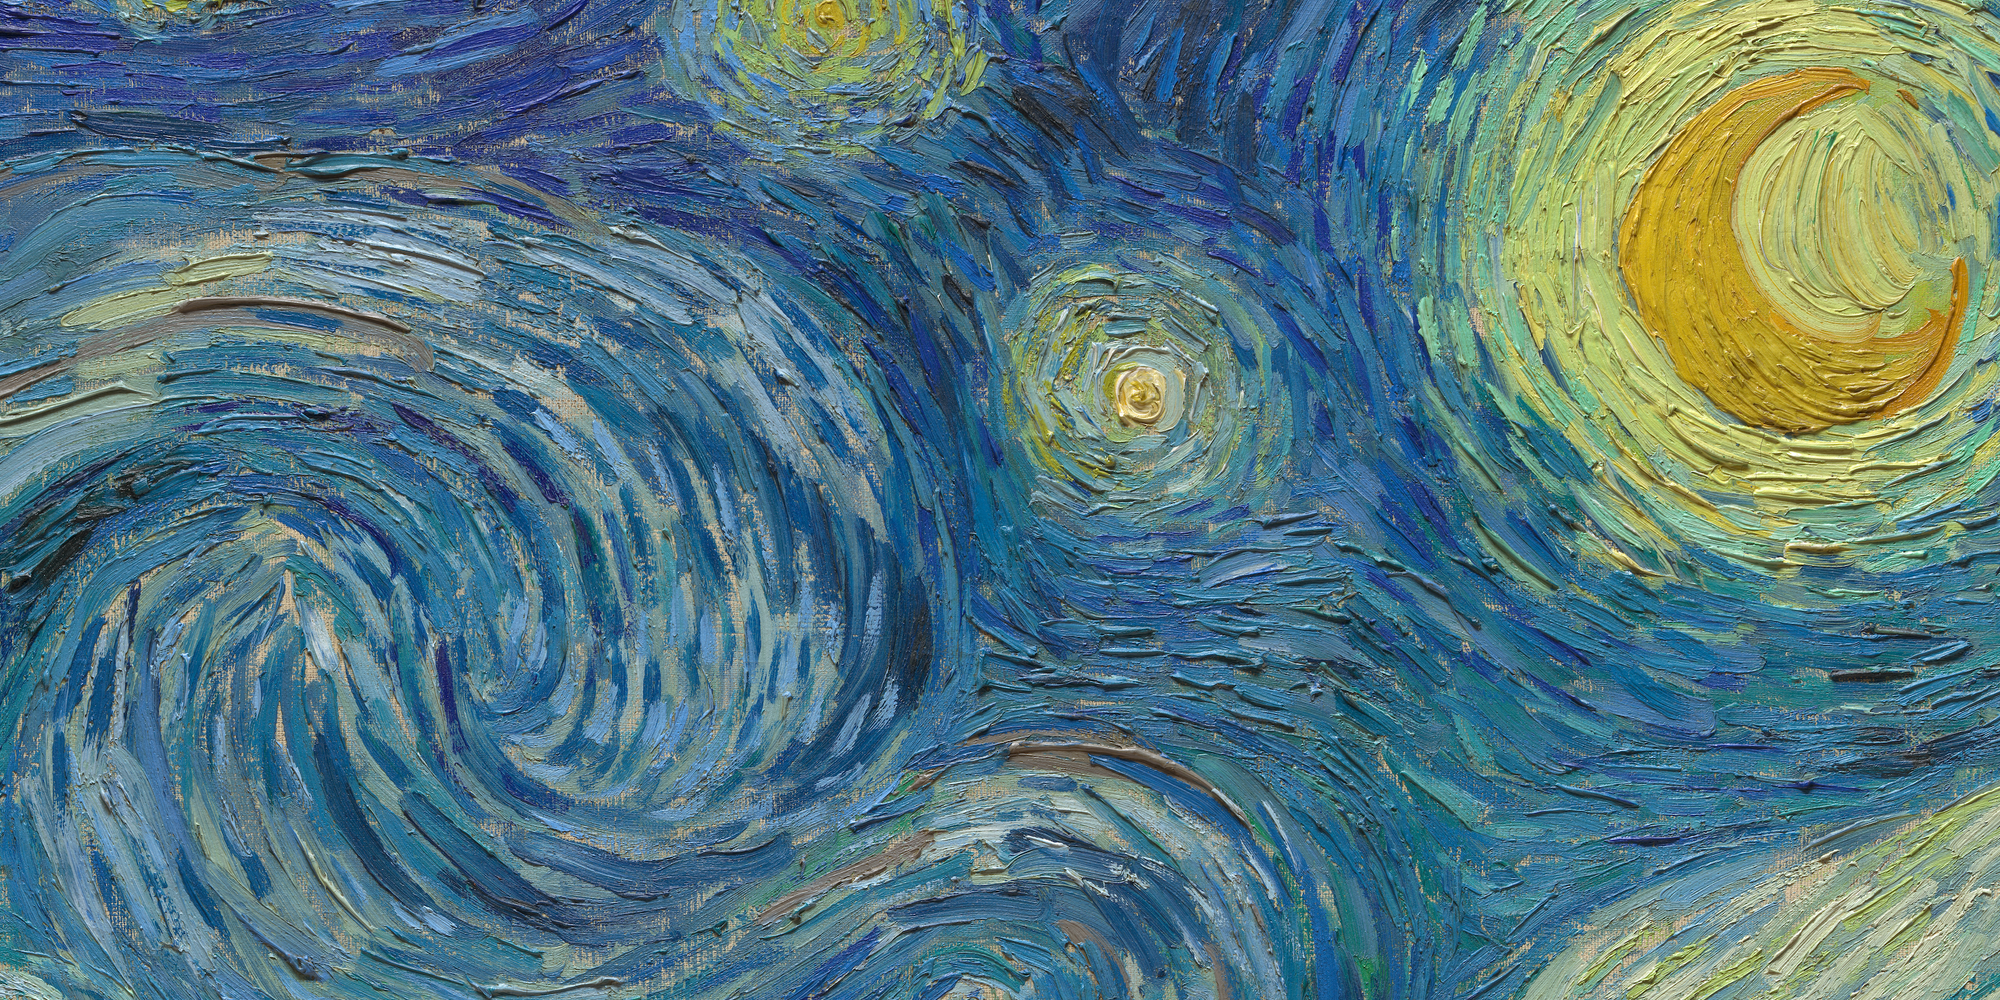 Vincent van Gogh The Starry Night